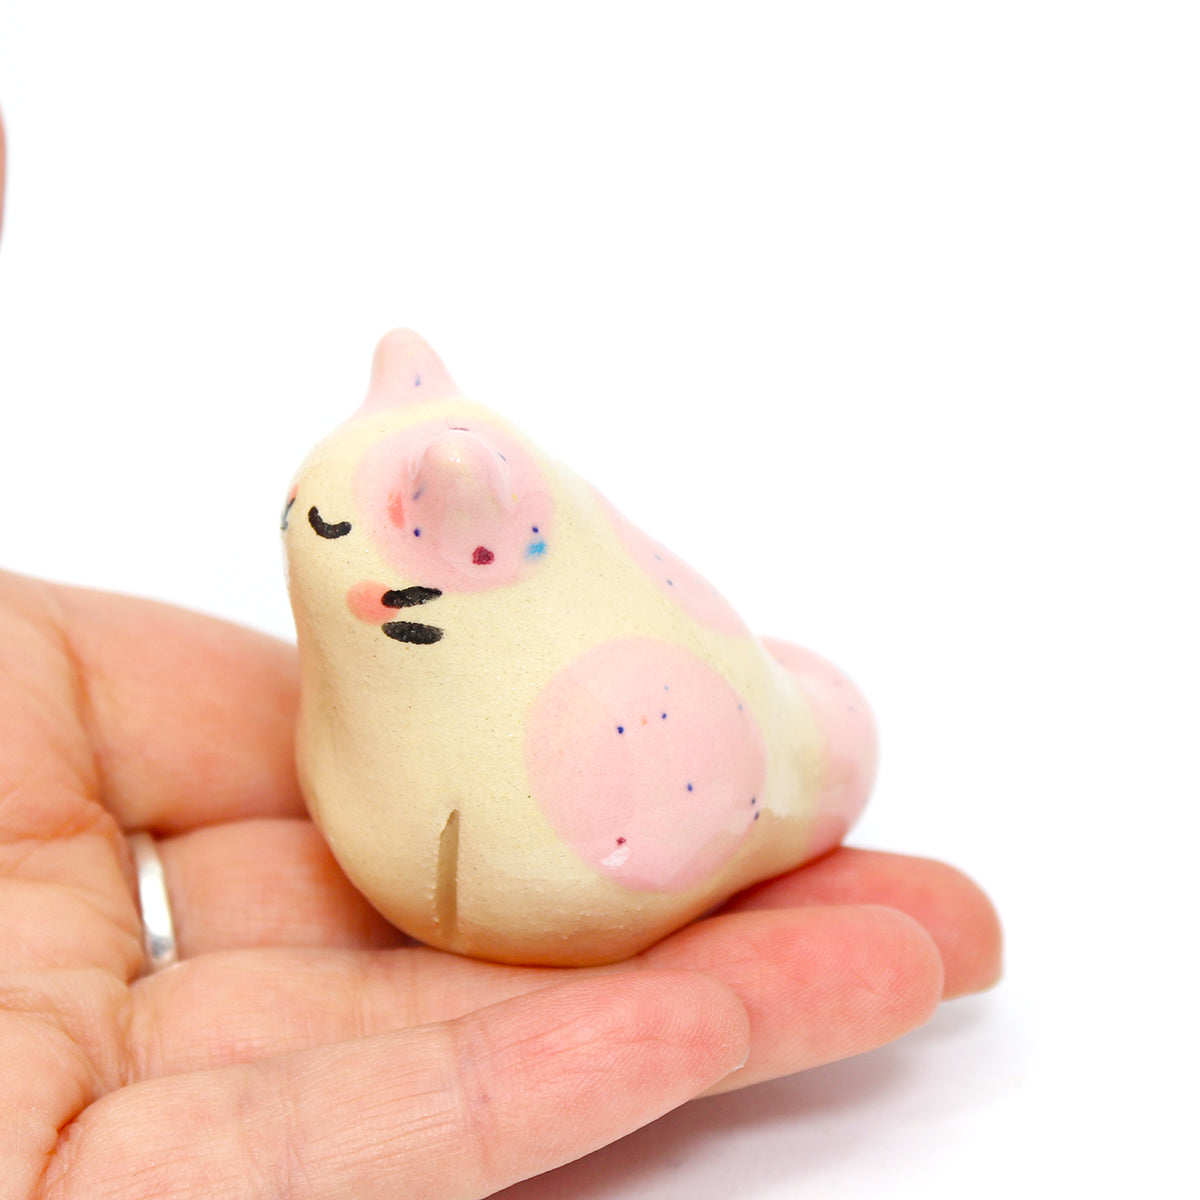 Ceramic Mini Kitty Figurine - #2164-2167